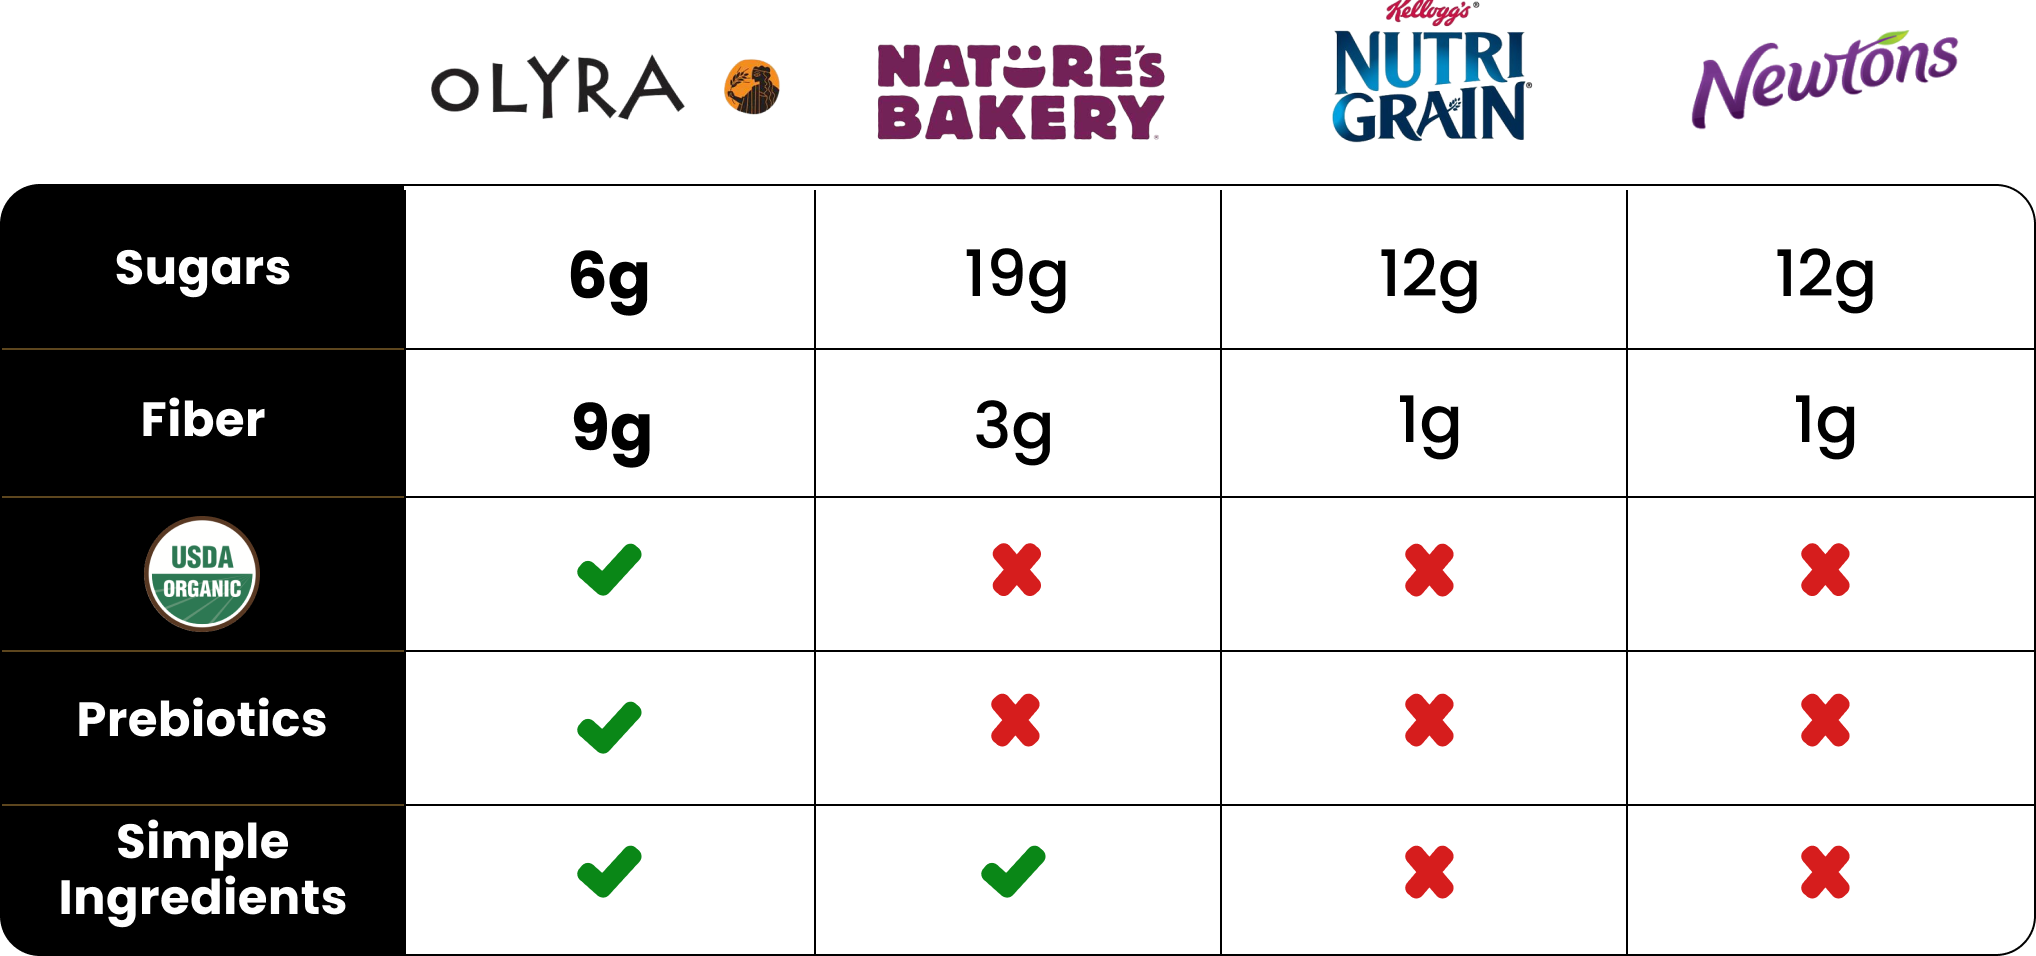 Chart that shows Olyra has less sugar, more fiber than leading breakfast bars